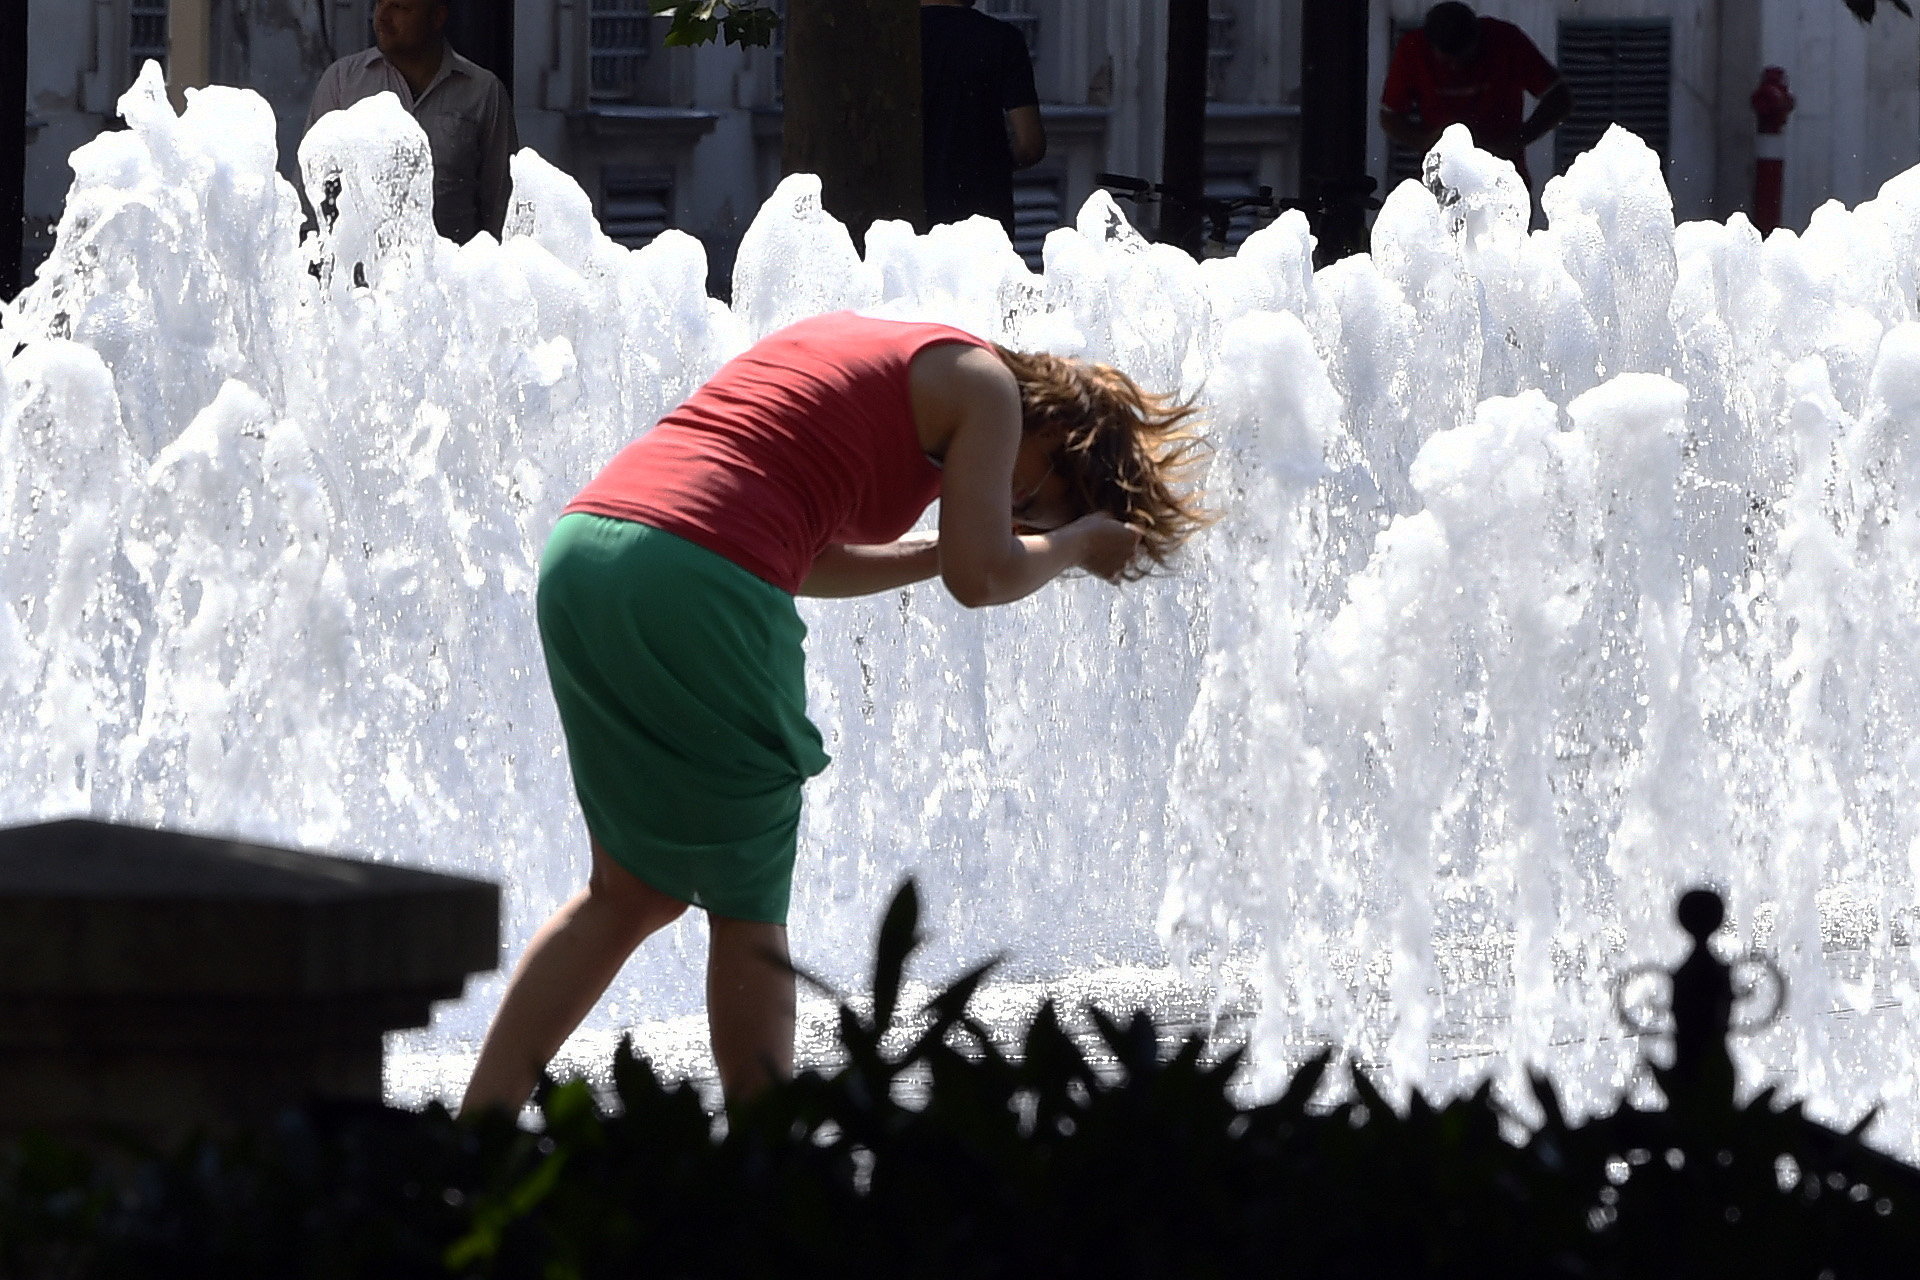 Third Degree Excessive Heat Alert Declared in Hungary